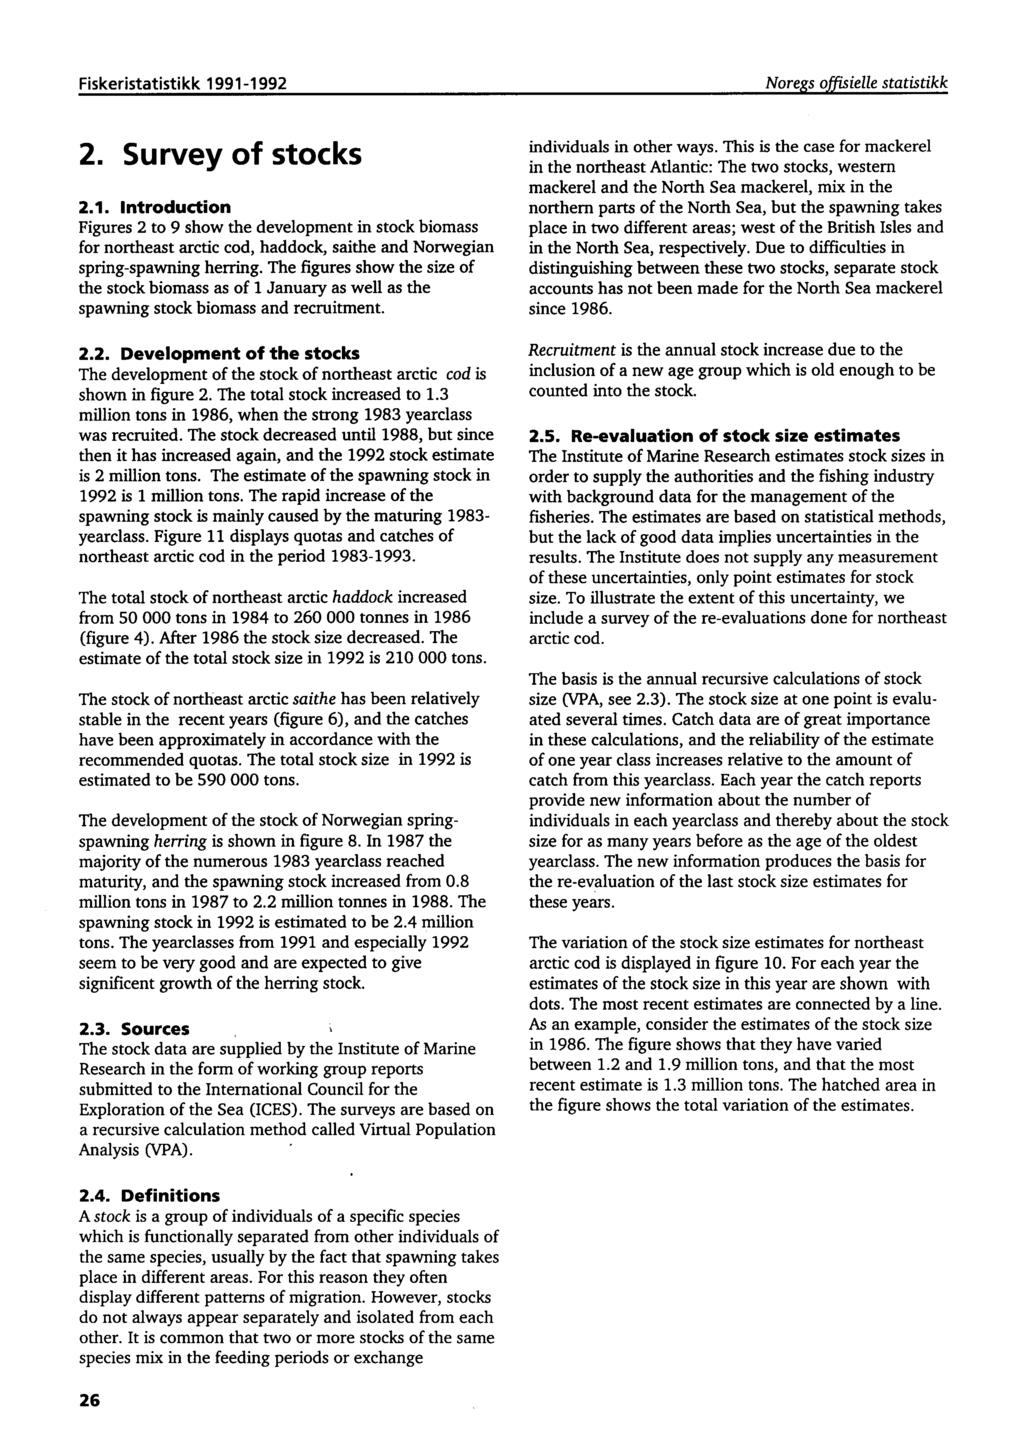 Fiskeristatistikk 1991-1992 Noregs offisielle statistikk 2. Survey of stocks 2.1. Introduction Figures 2 to 9 show the development in stock biomass for northeast arctic cod, haddock, saithe and Norwegian spring-spawning herring.